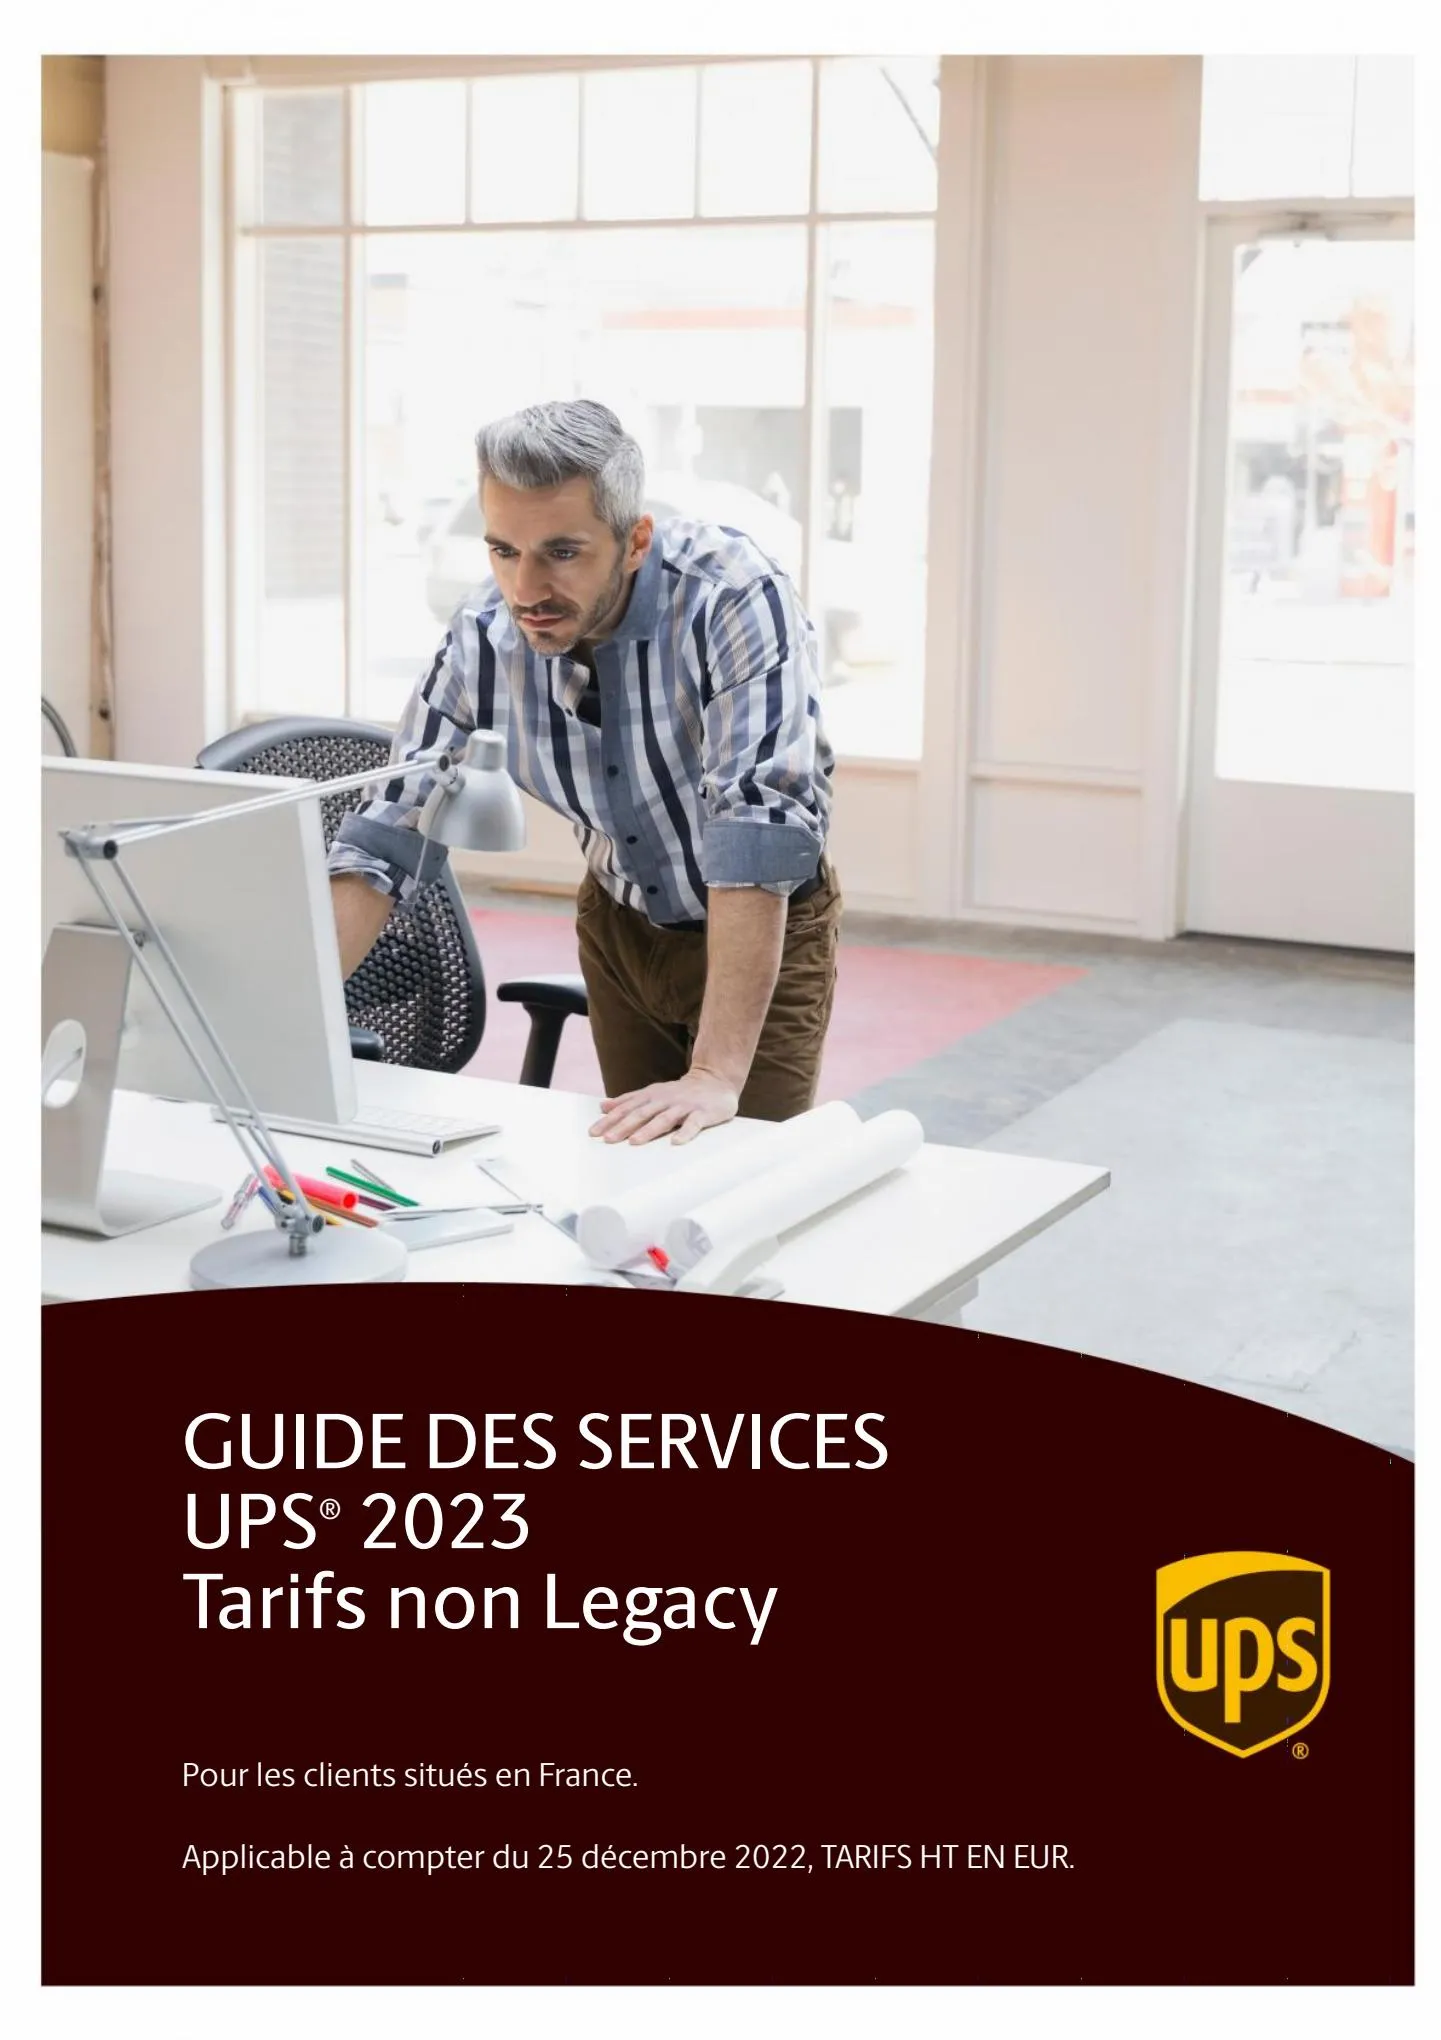 Catalogue UPS®  2023 Tarifs non Legacy, page 00001